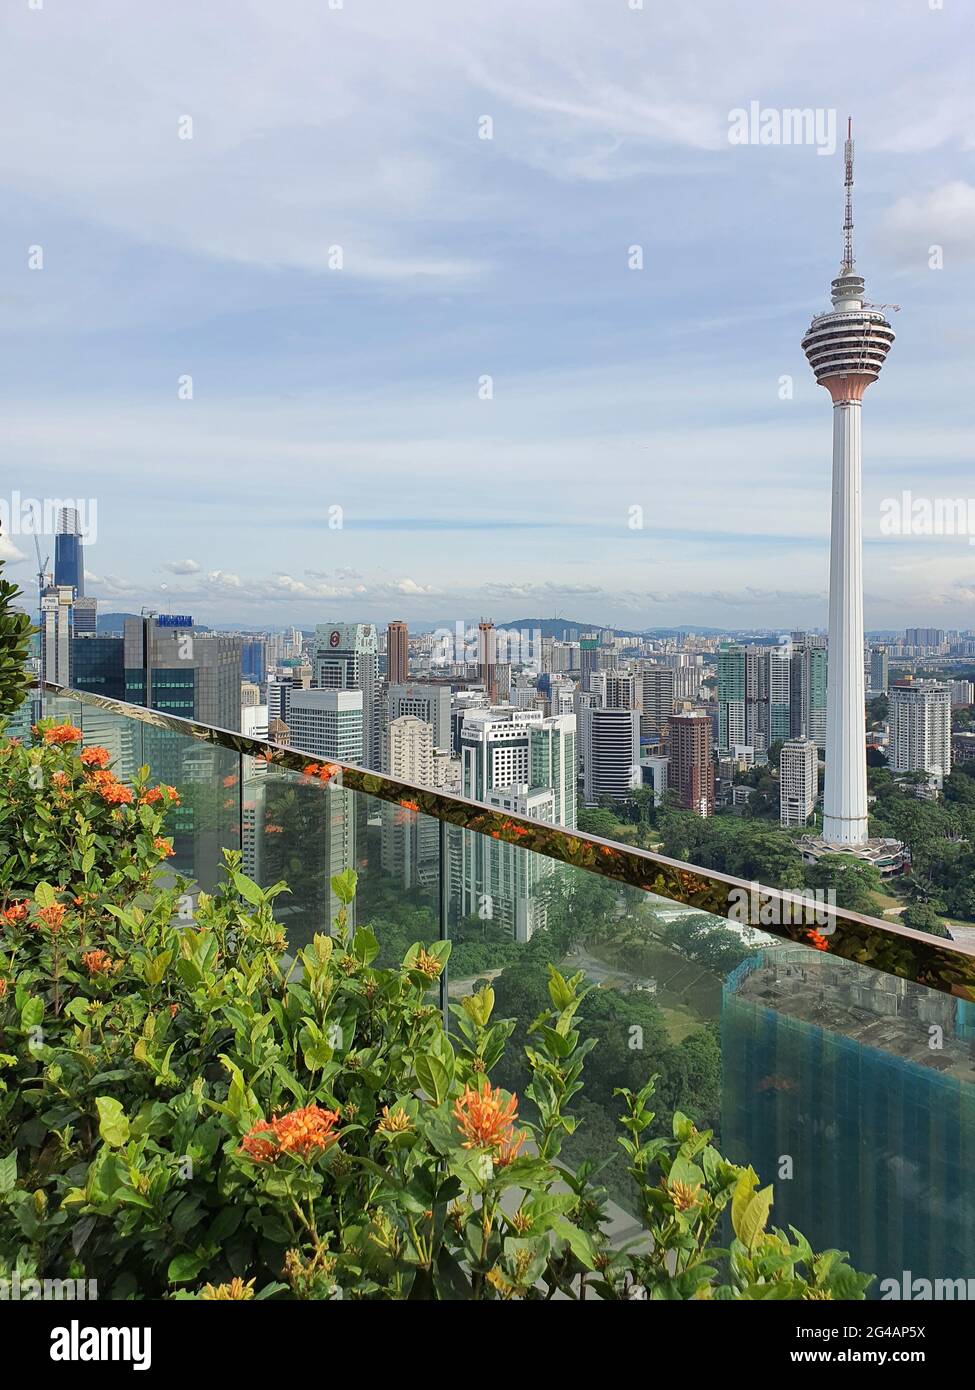 KL tower and Kuala Lumpur City View Stock Photo